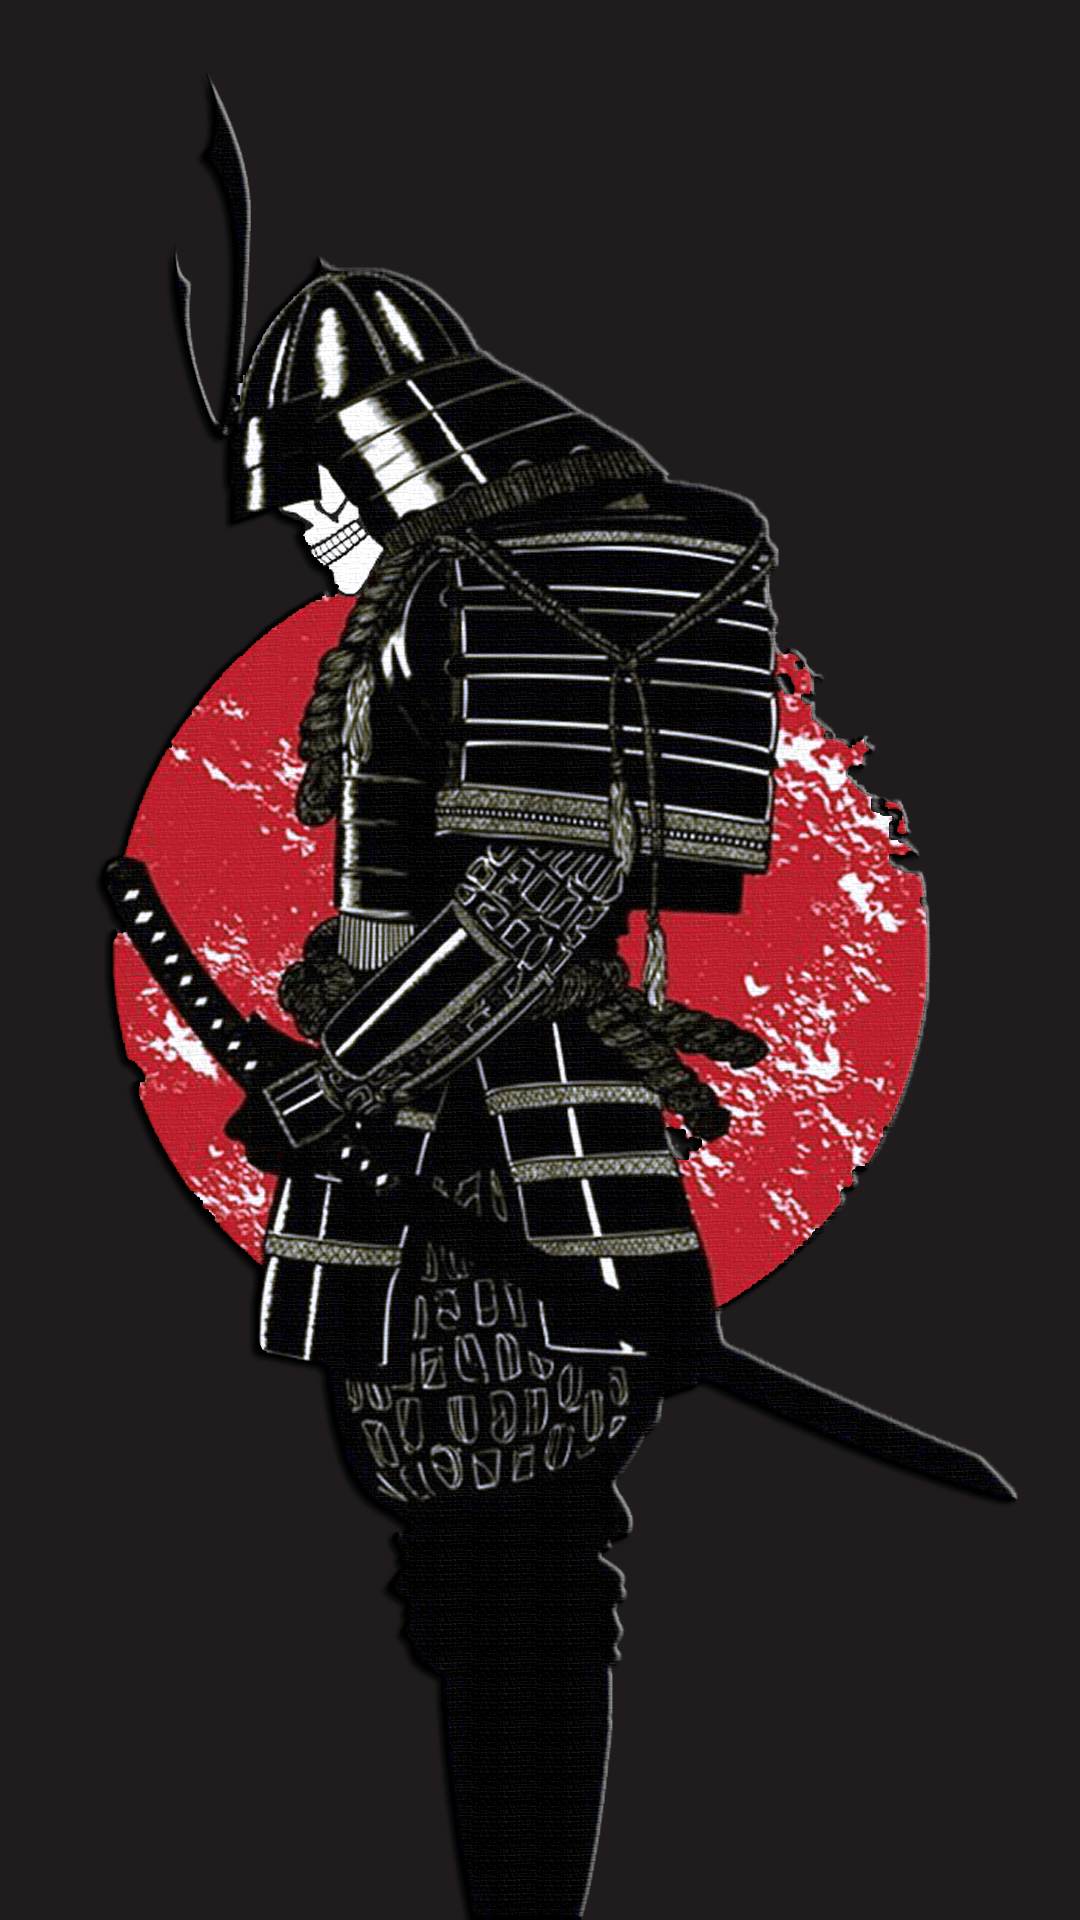 Samurai Abstract iPhone Wallpaper Free Samurai Abstract iPhone Background